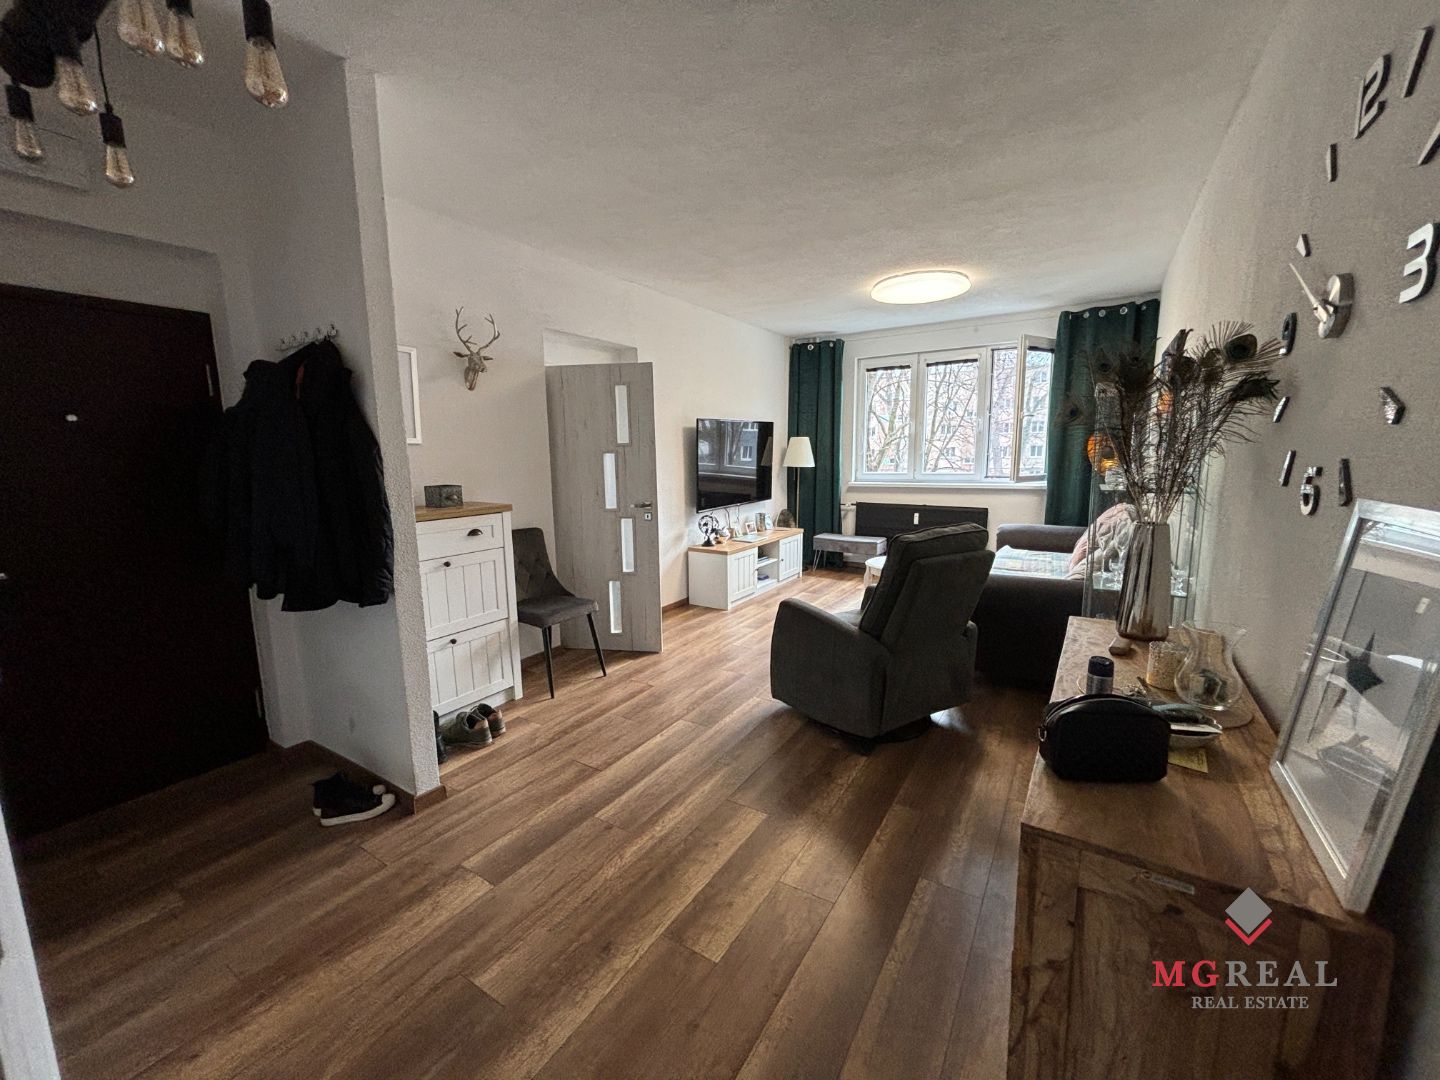 2 izbový byt s balkónom po rekonštrukcii Topoľčany/ VYPLATENA ZALOHA